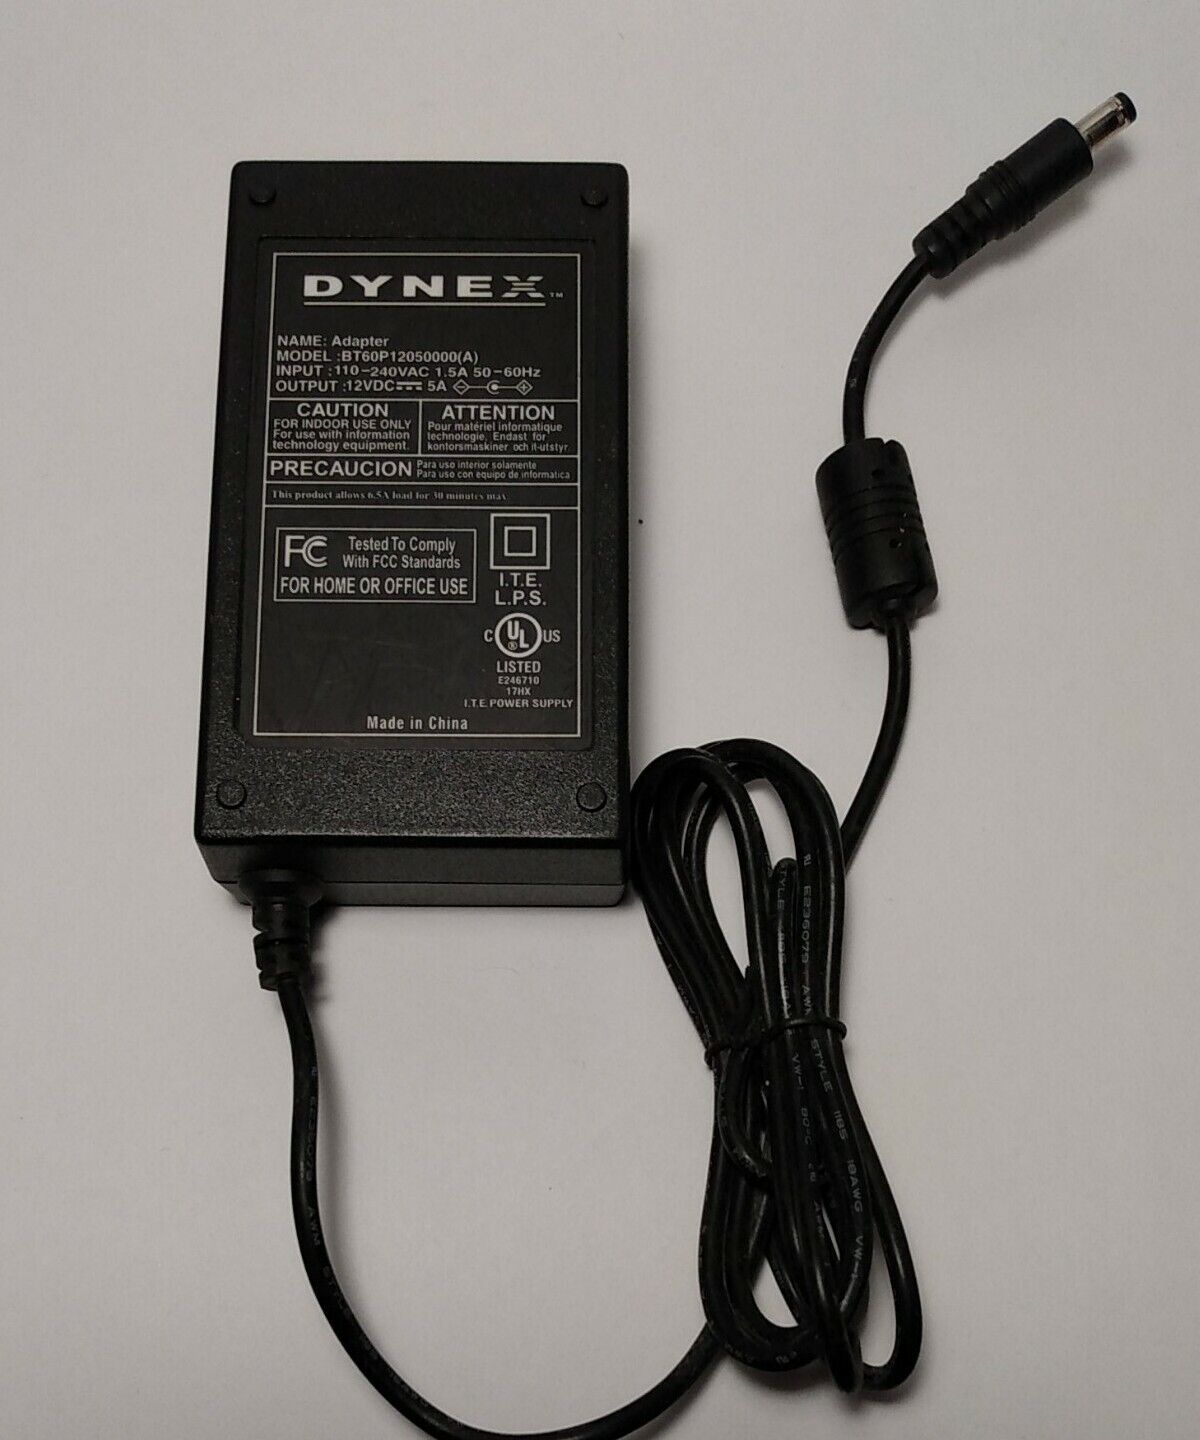 *Brand NEW* Dynex BT60P12050000(A) DC 12V 5A ( No Power Cord)Power Supply AC Adapter